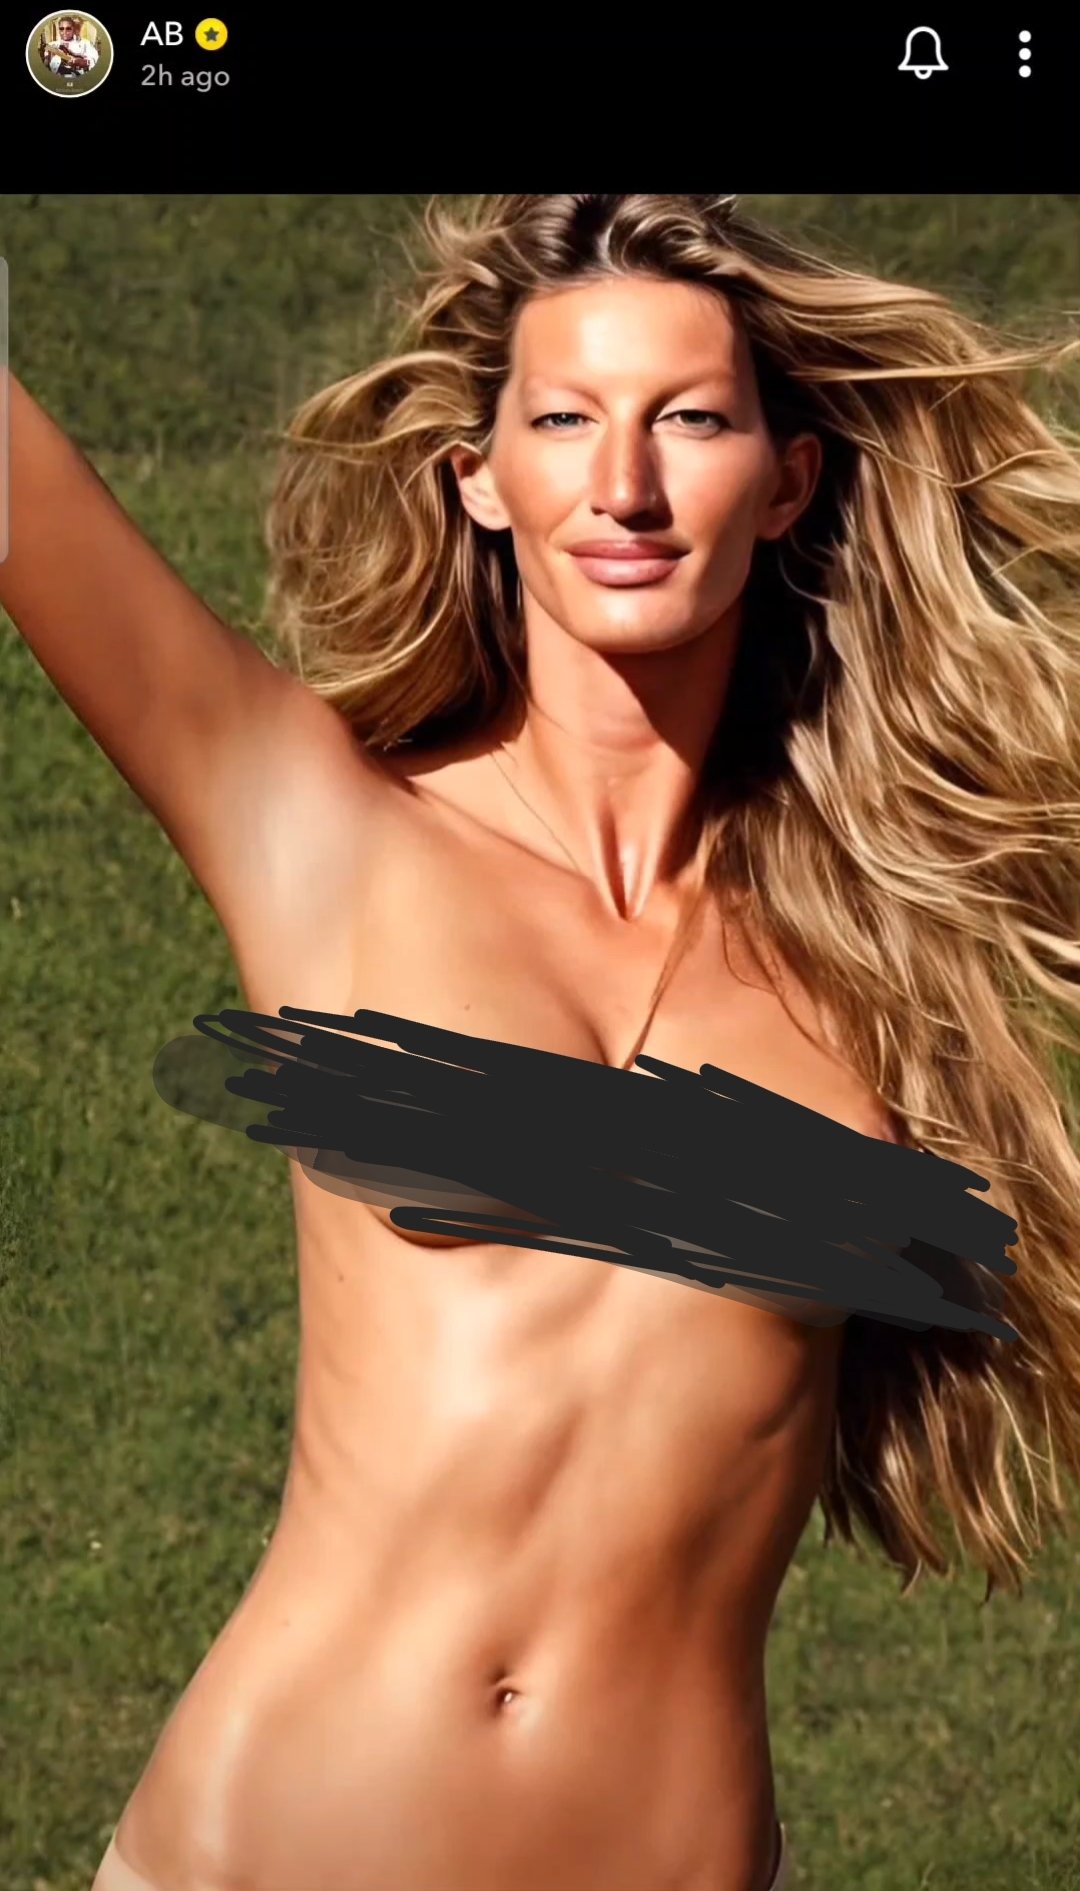 Antonio Brown Posts Topless Photo of Tom Brady's Ex-Wife Gisele Bundchen on  His Snapchat - Page 2 of 4 - BlackSportsOnline